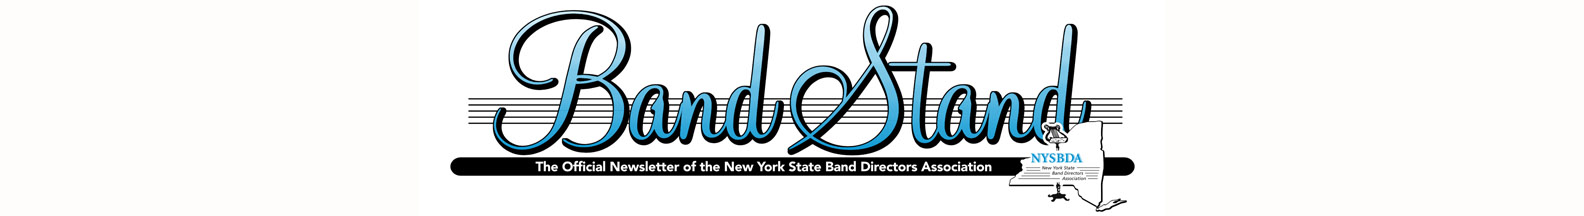 Band Stand Logo